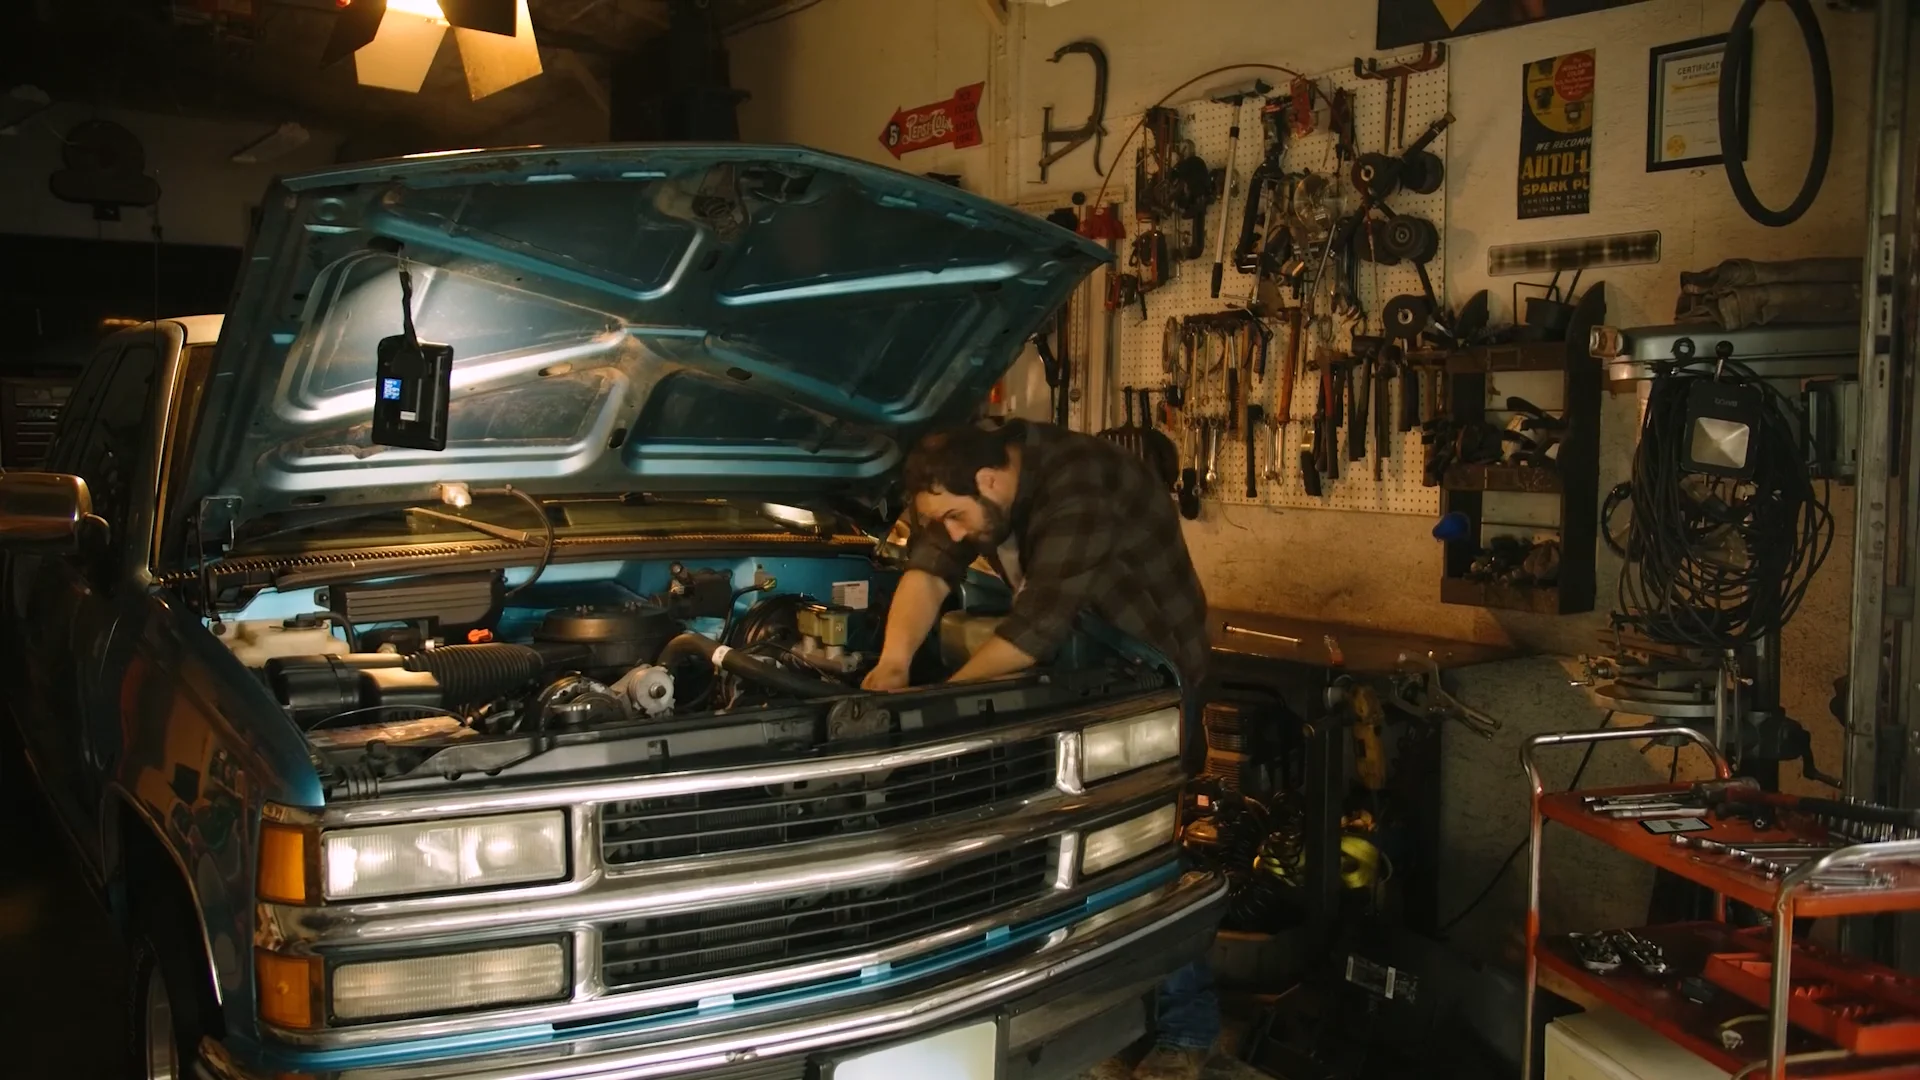 GSF Car Parts - AlliCat Online Part Finder features on Vimeo